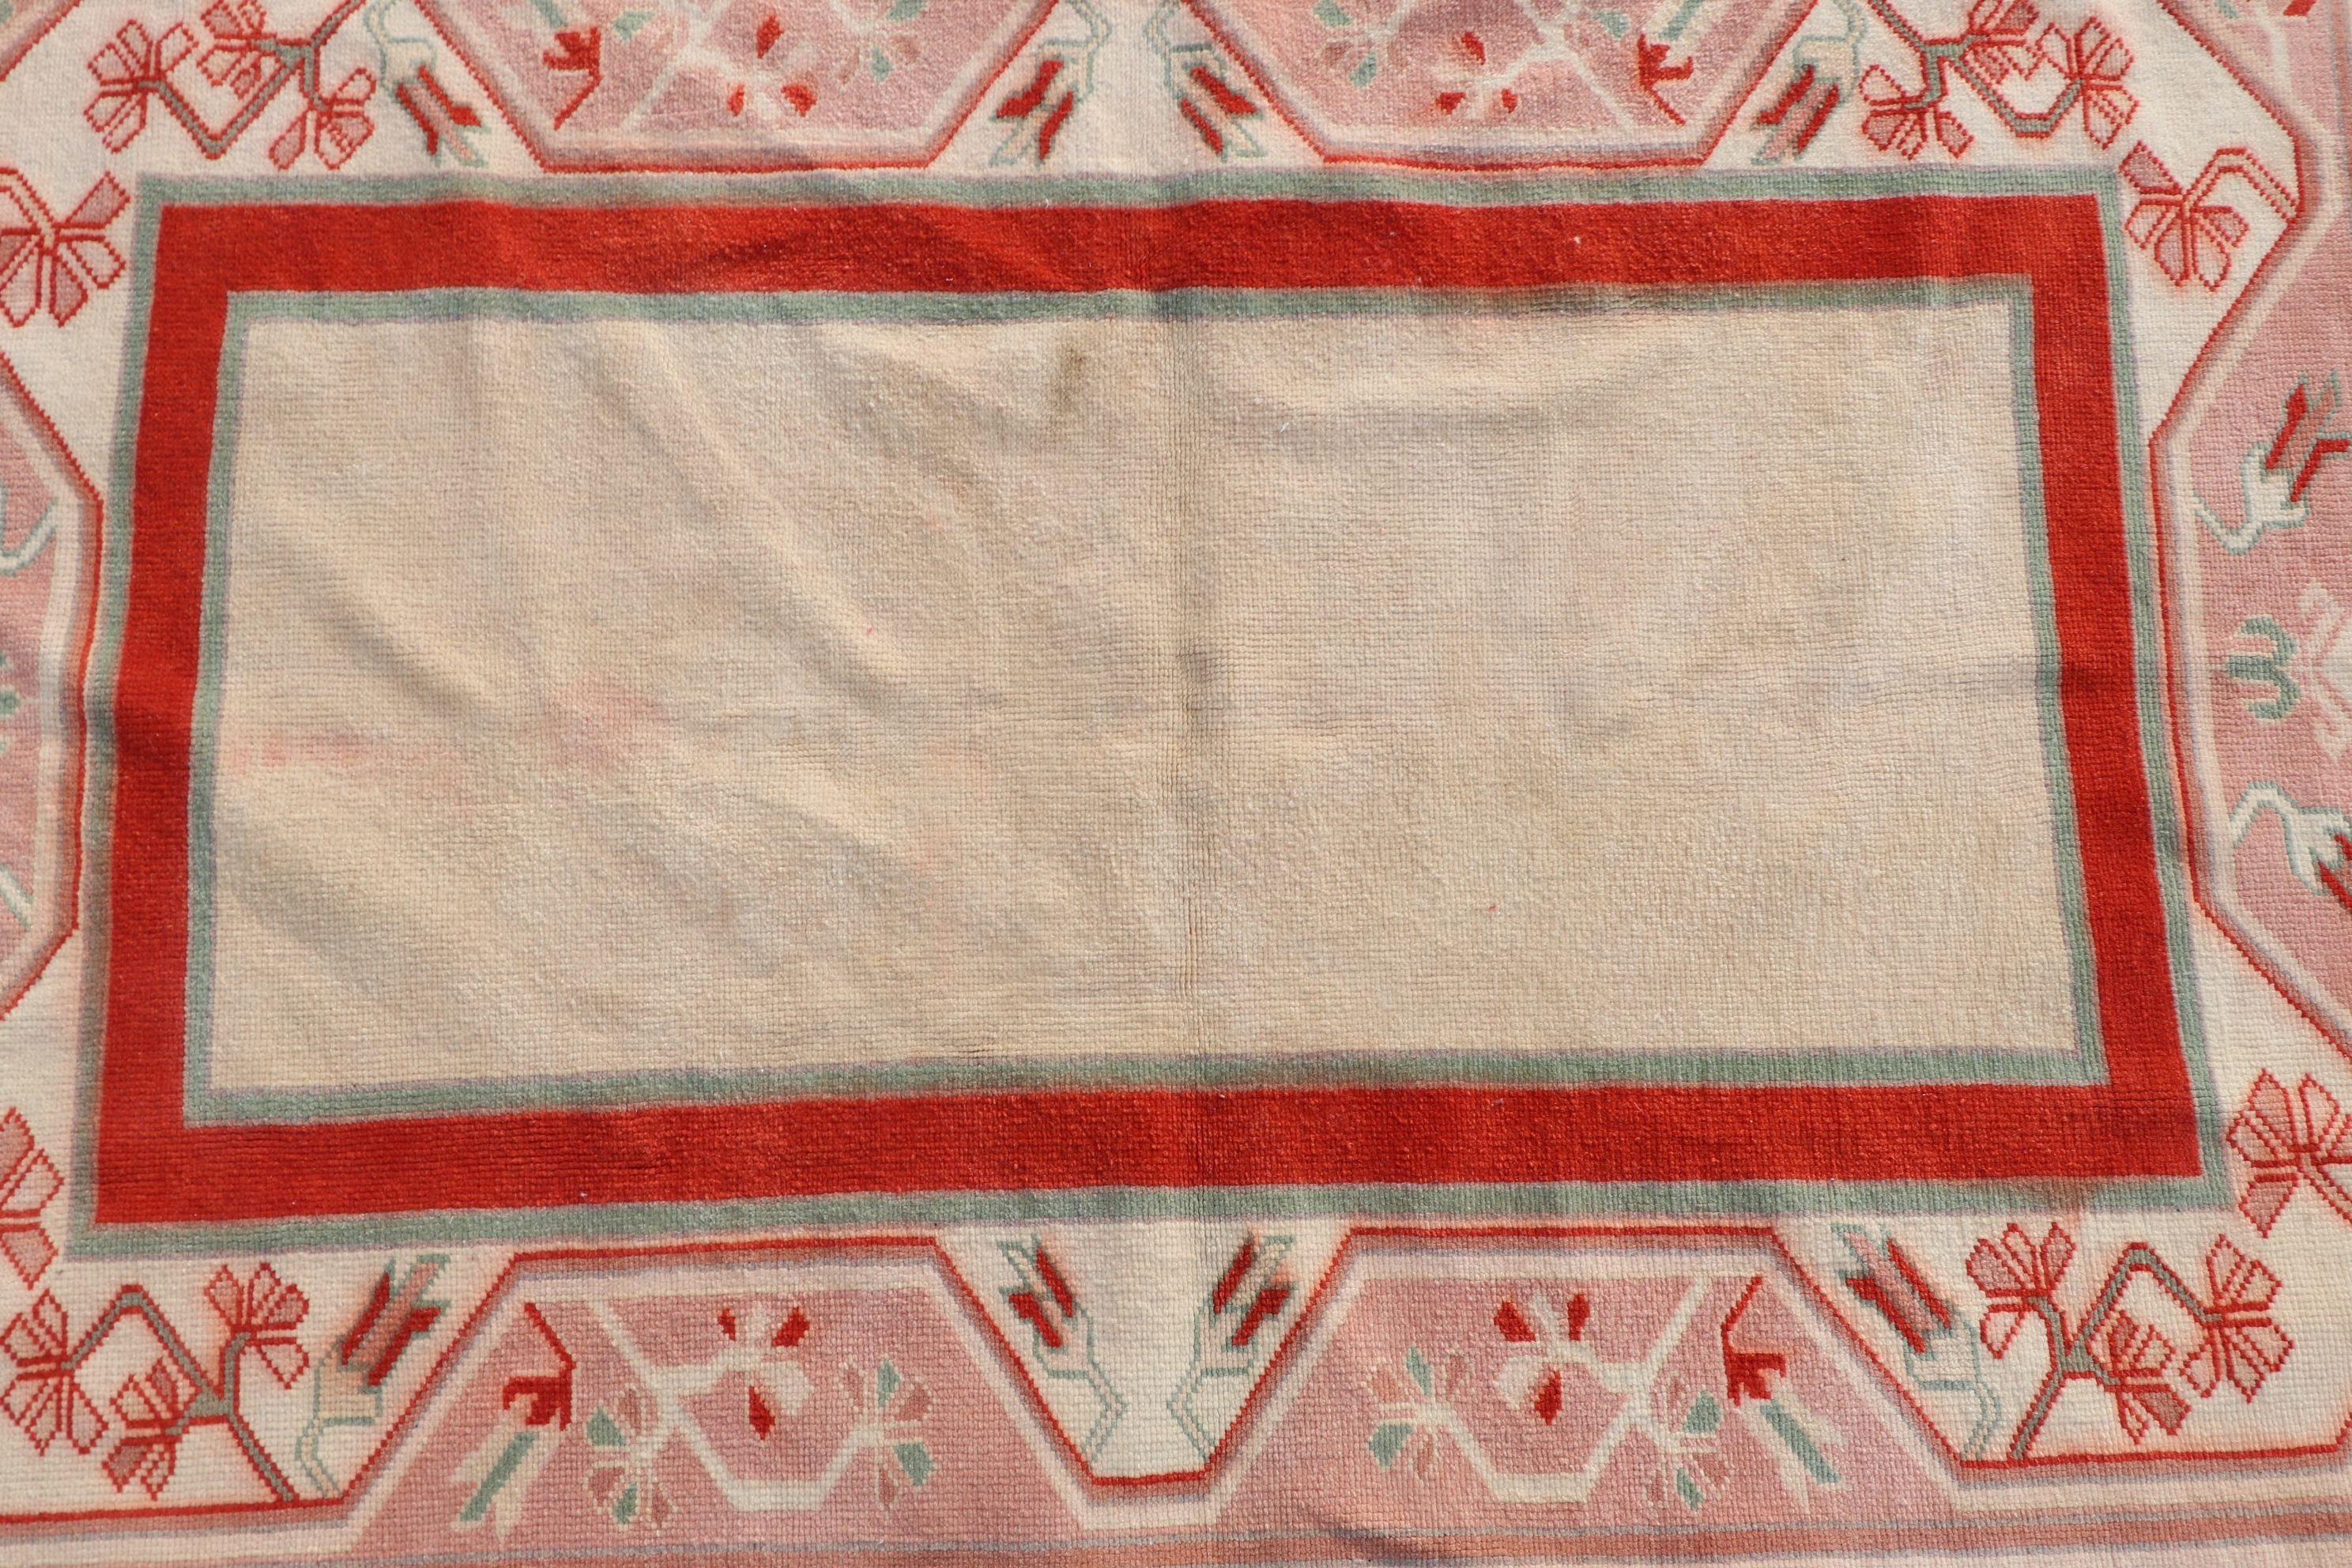 Anatolian Rugs, Vintage Rug, Oriental Rug, Kitchen Rug, Pink Wool Rugs, Rugs for Nursery, Turkish Rugs, 3.5x5 ft Accent Rug, Nursery Rug